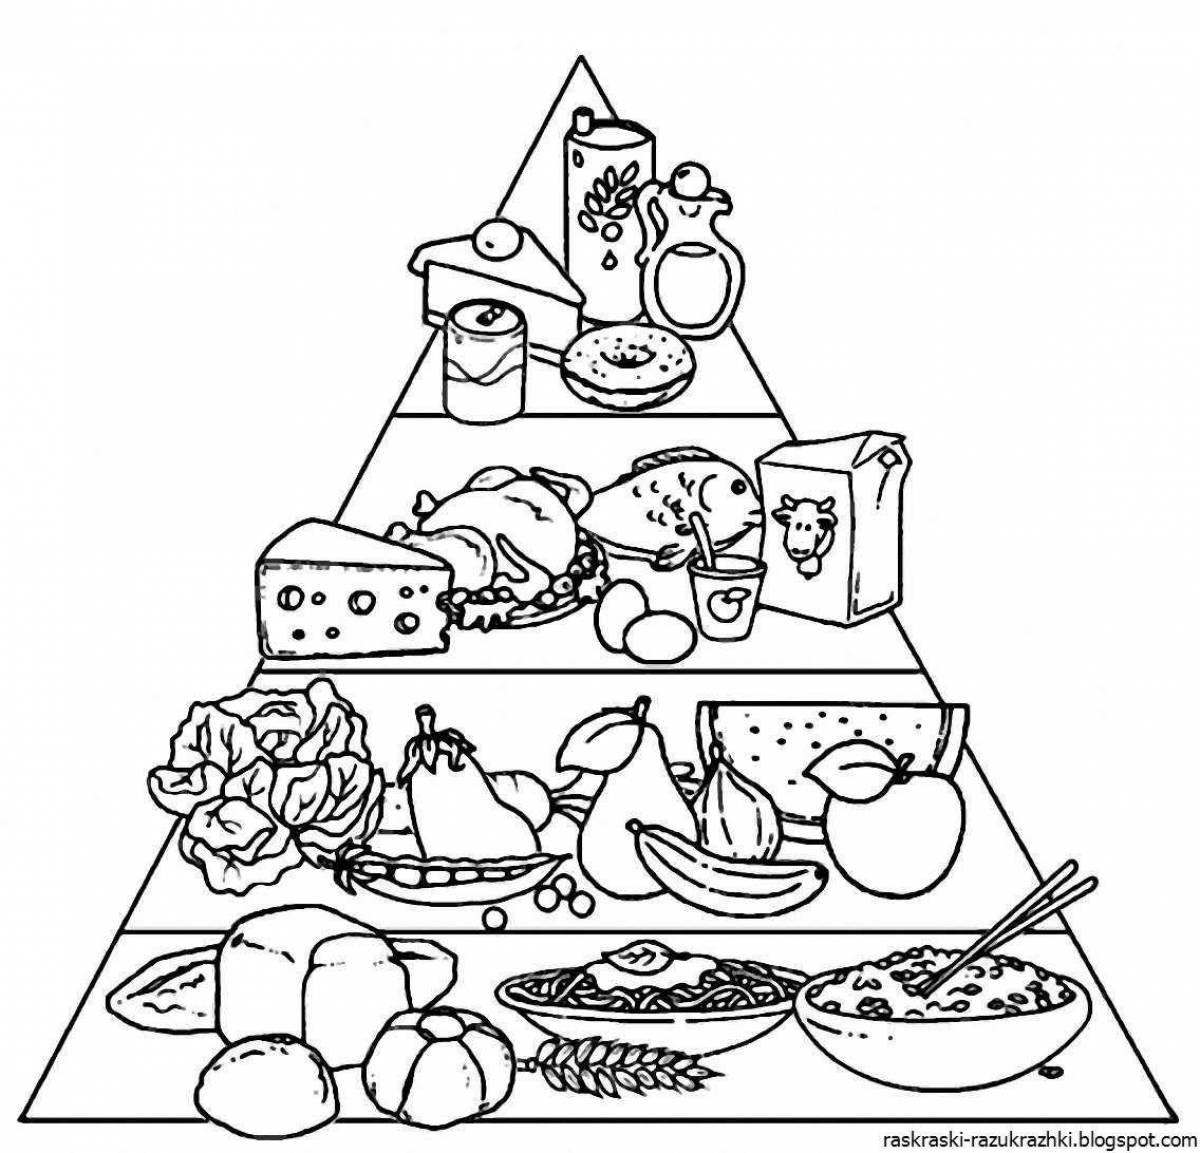 Colourful food pyramid coloring book